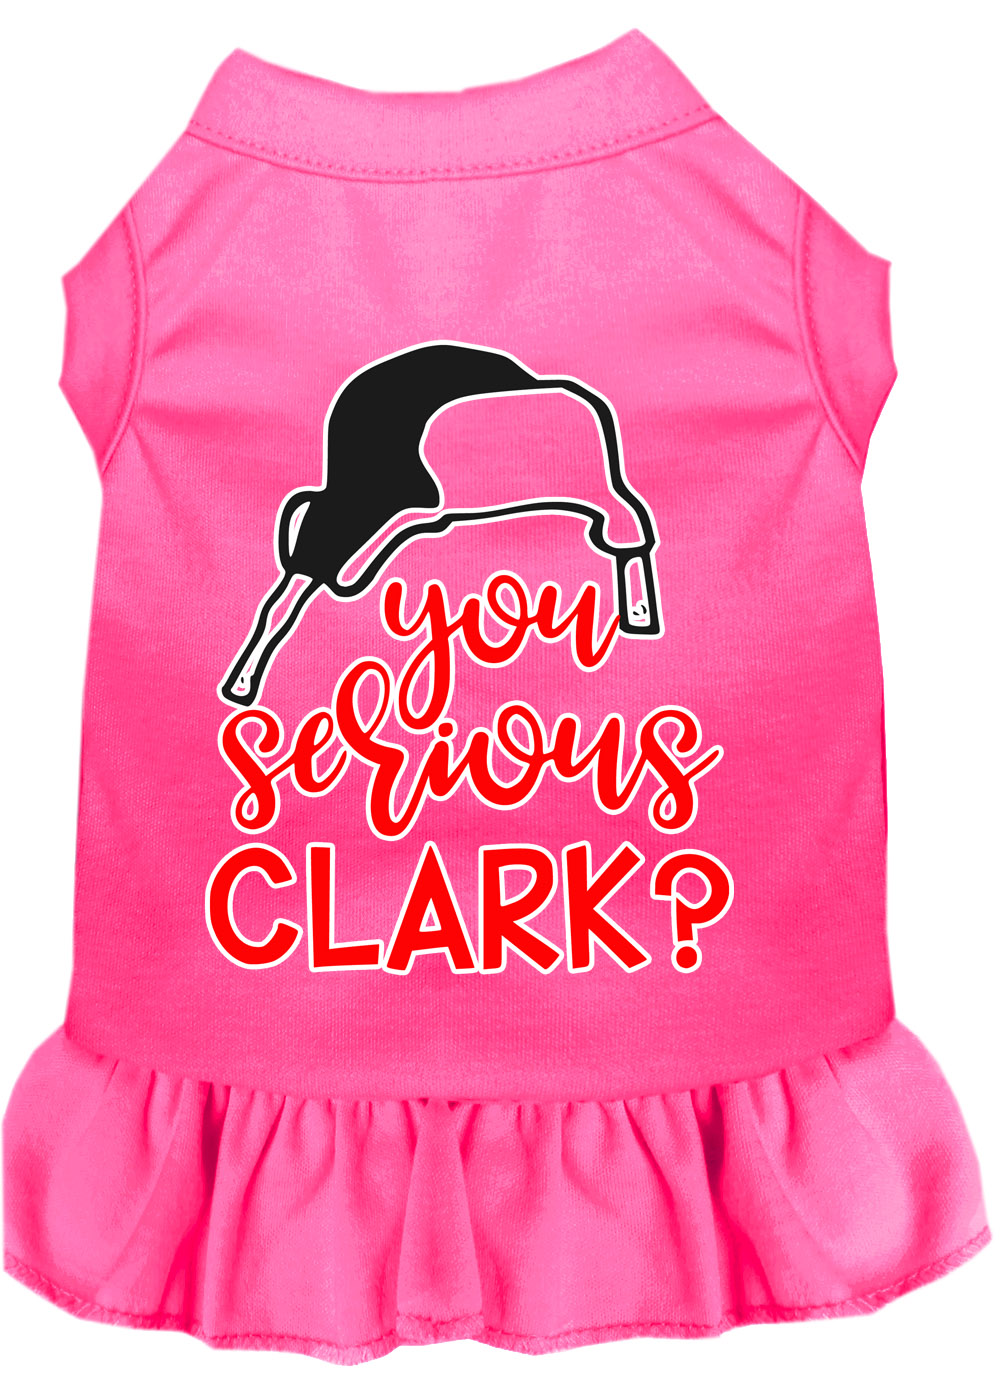 You Serious Clark? Screen Print Dog Dress Bright Pink XL